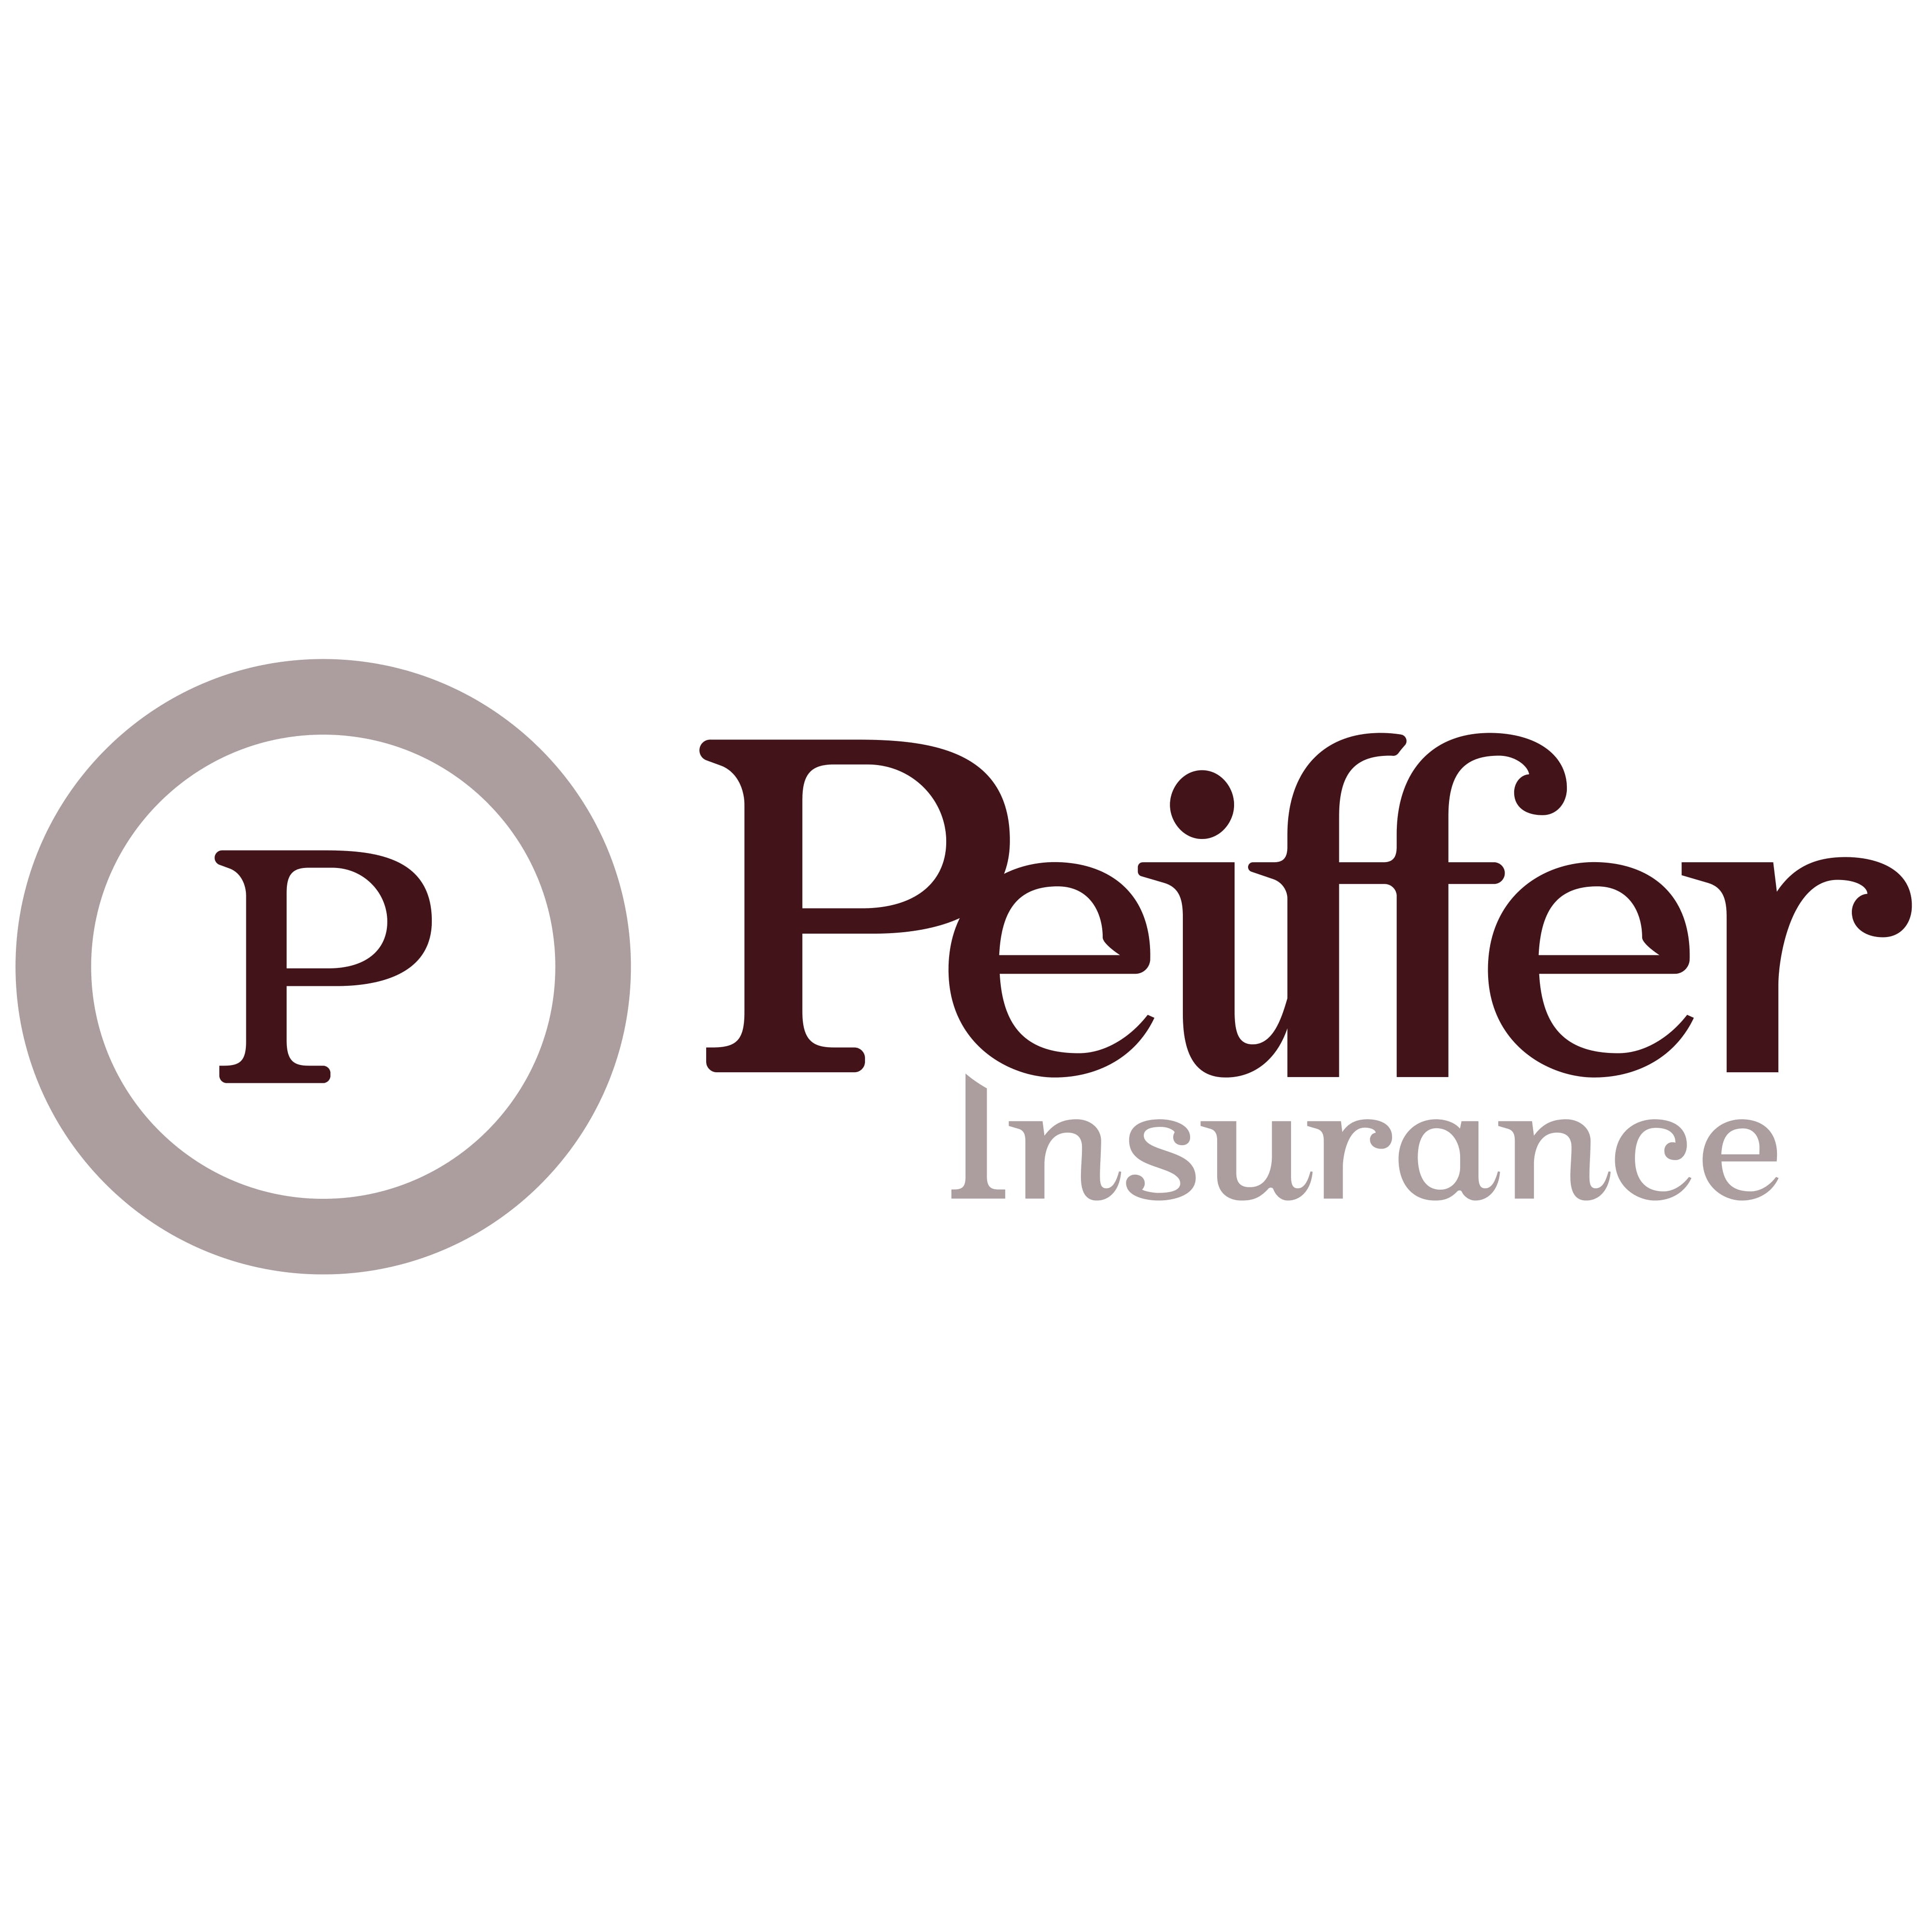 Peiffer Insurance, Insurance Agent